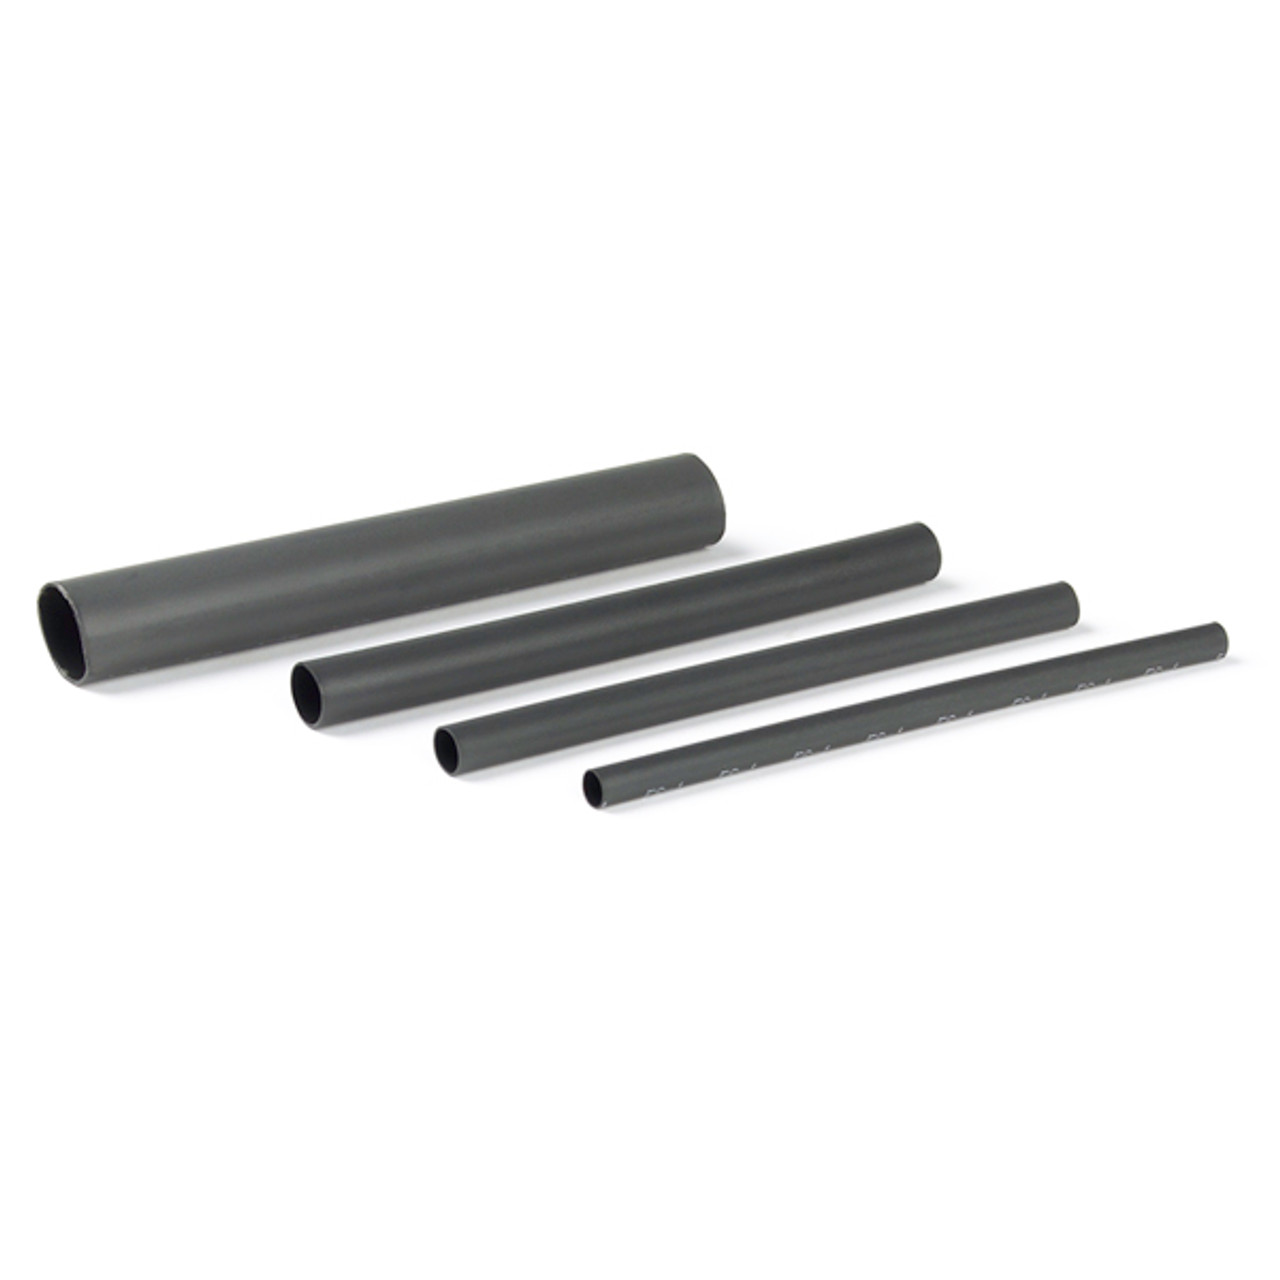 1" Dual Wall 3:1 Flexible Adhesive Lined Heat Shrink Tubing 6" @ 10 Pack - Black  84-4021-3